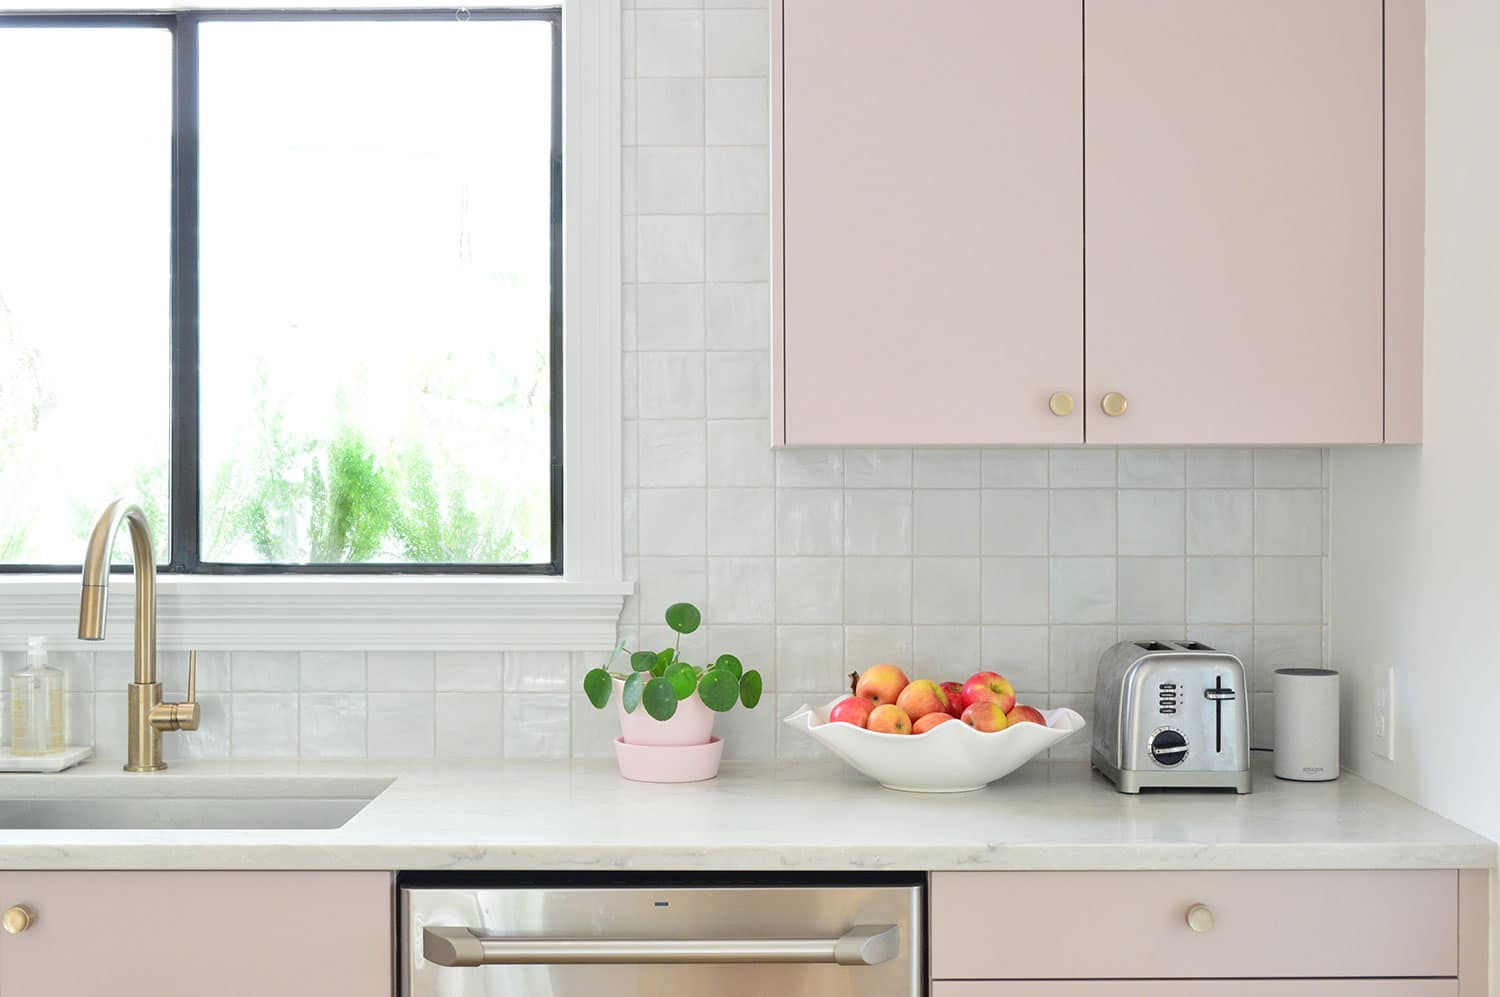 How to Choose the Perfect Kitchen Tiles - Kitchen Tile Ideas 2020